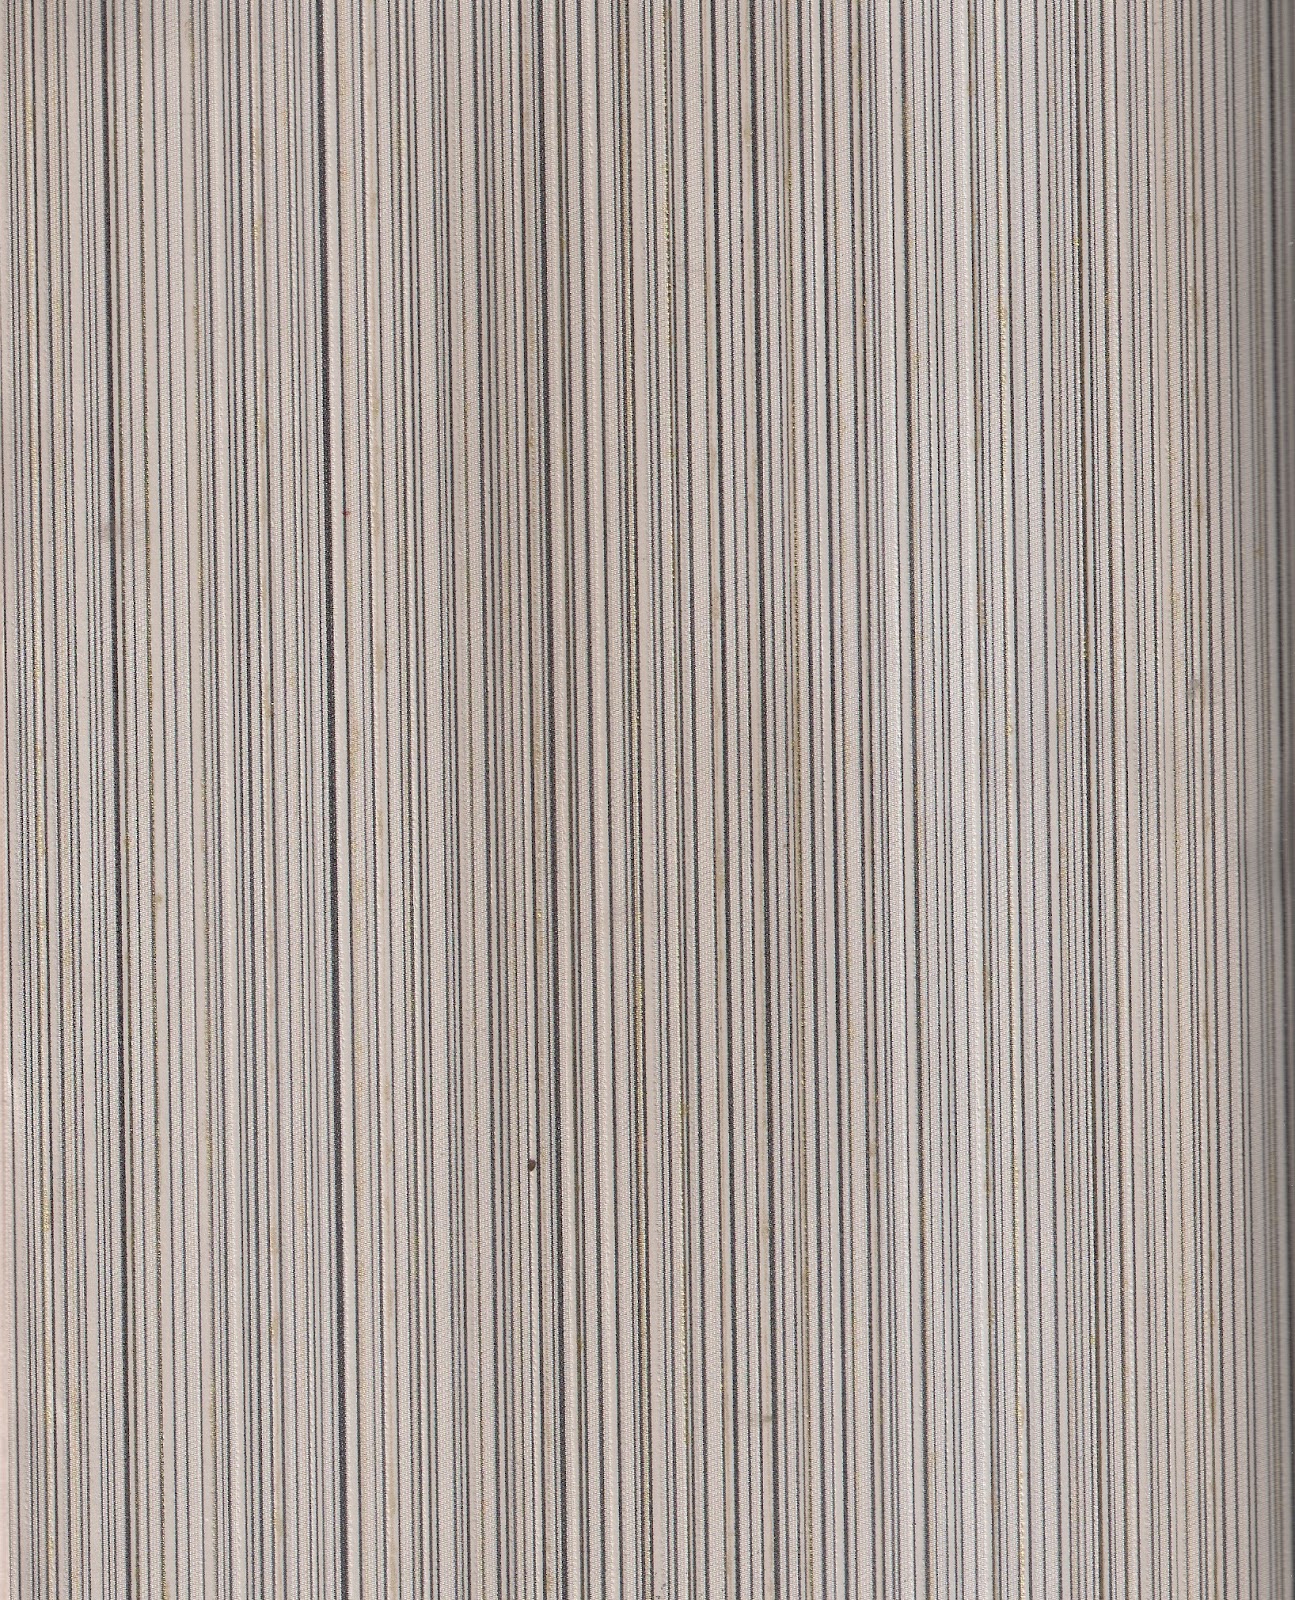 holographic wallpaper,line,wood,beige